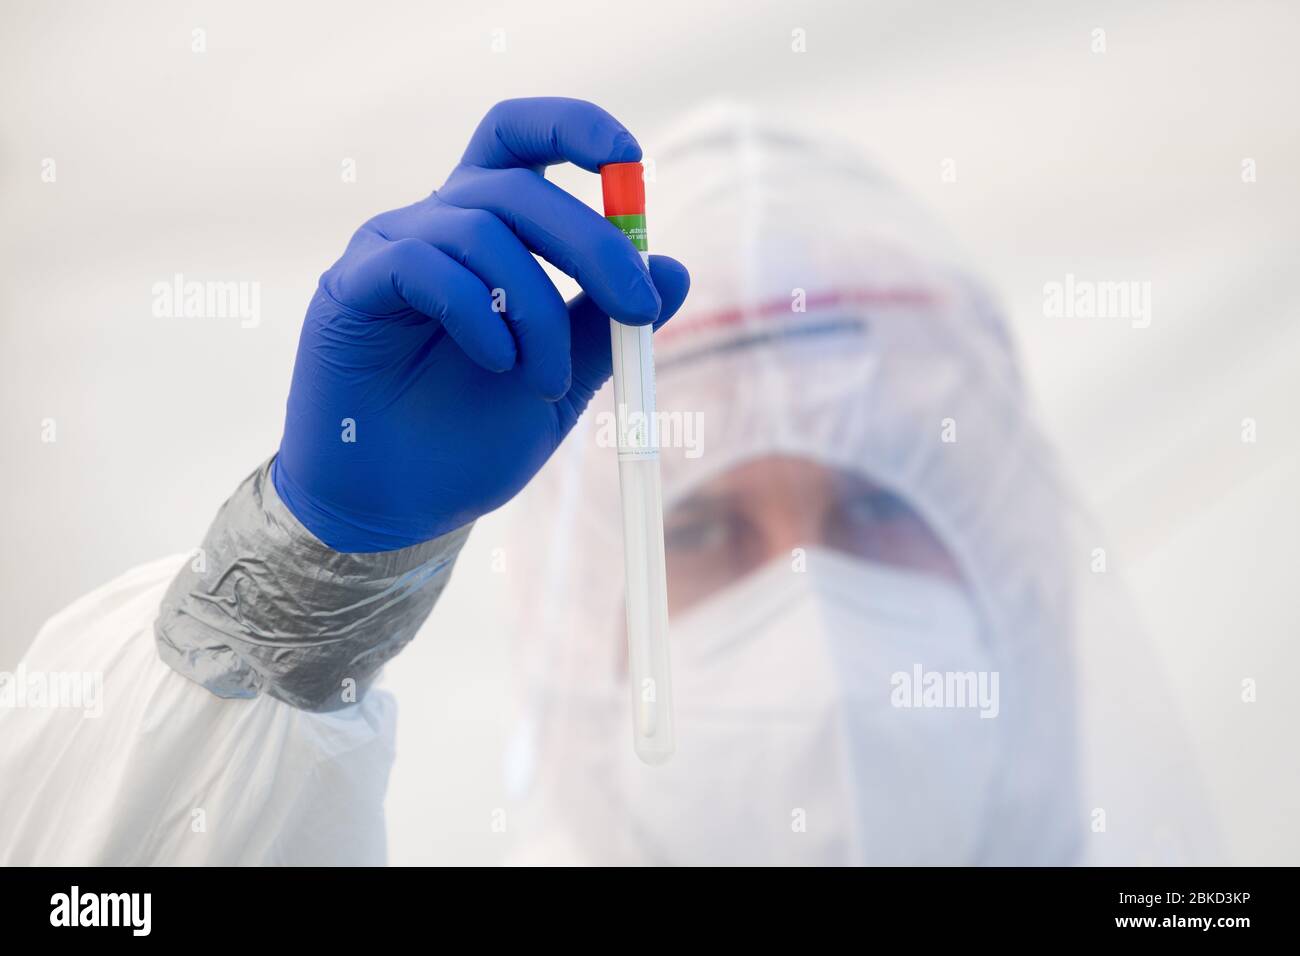 McDrive-Teststelle für die Coronavirus-Krankheit 2019 (COVID-19) in Gdynia, Polen. 23. April 2020 © Wojciech Strozyk / Alamy Stock Photo Stockfoto